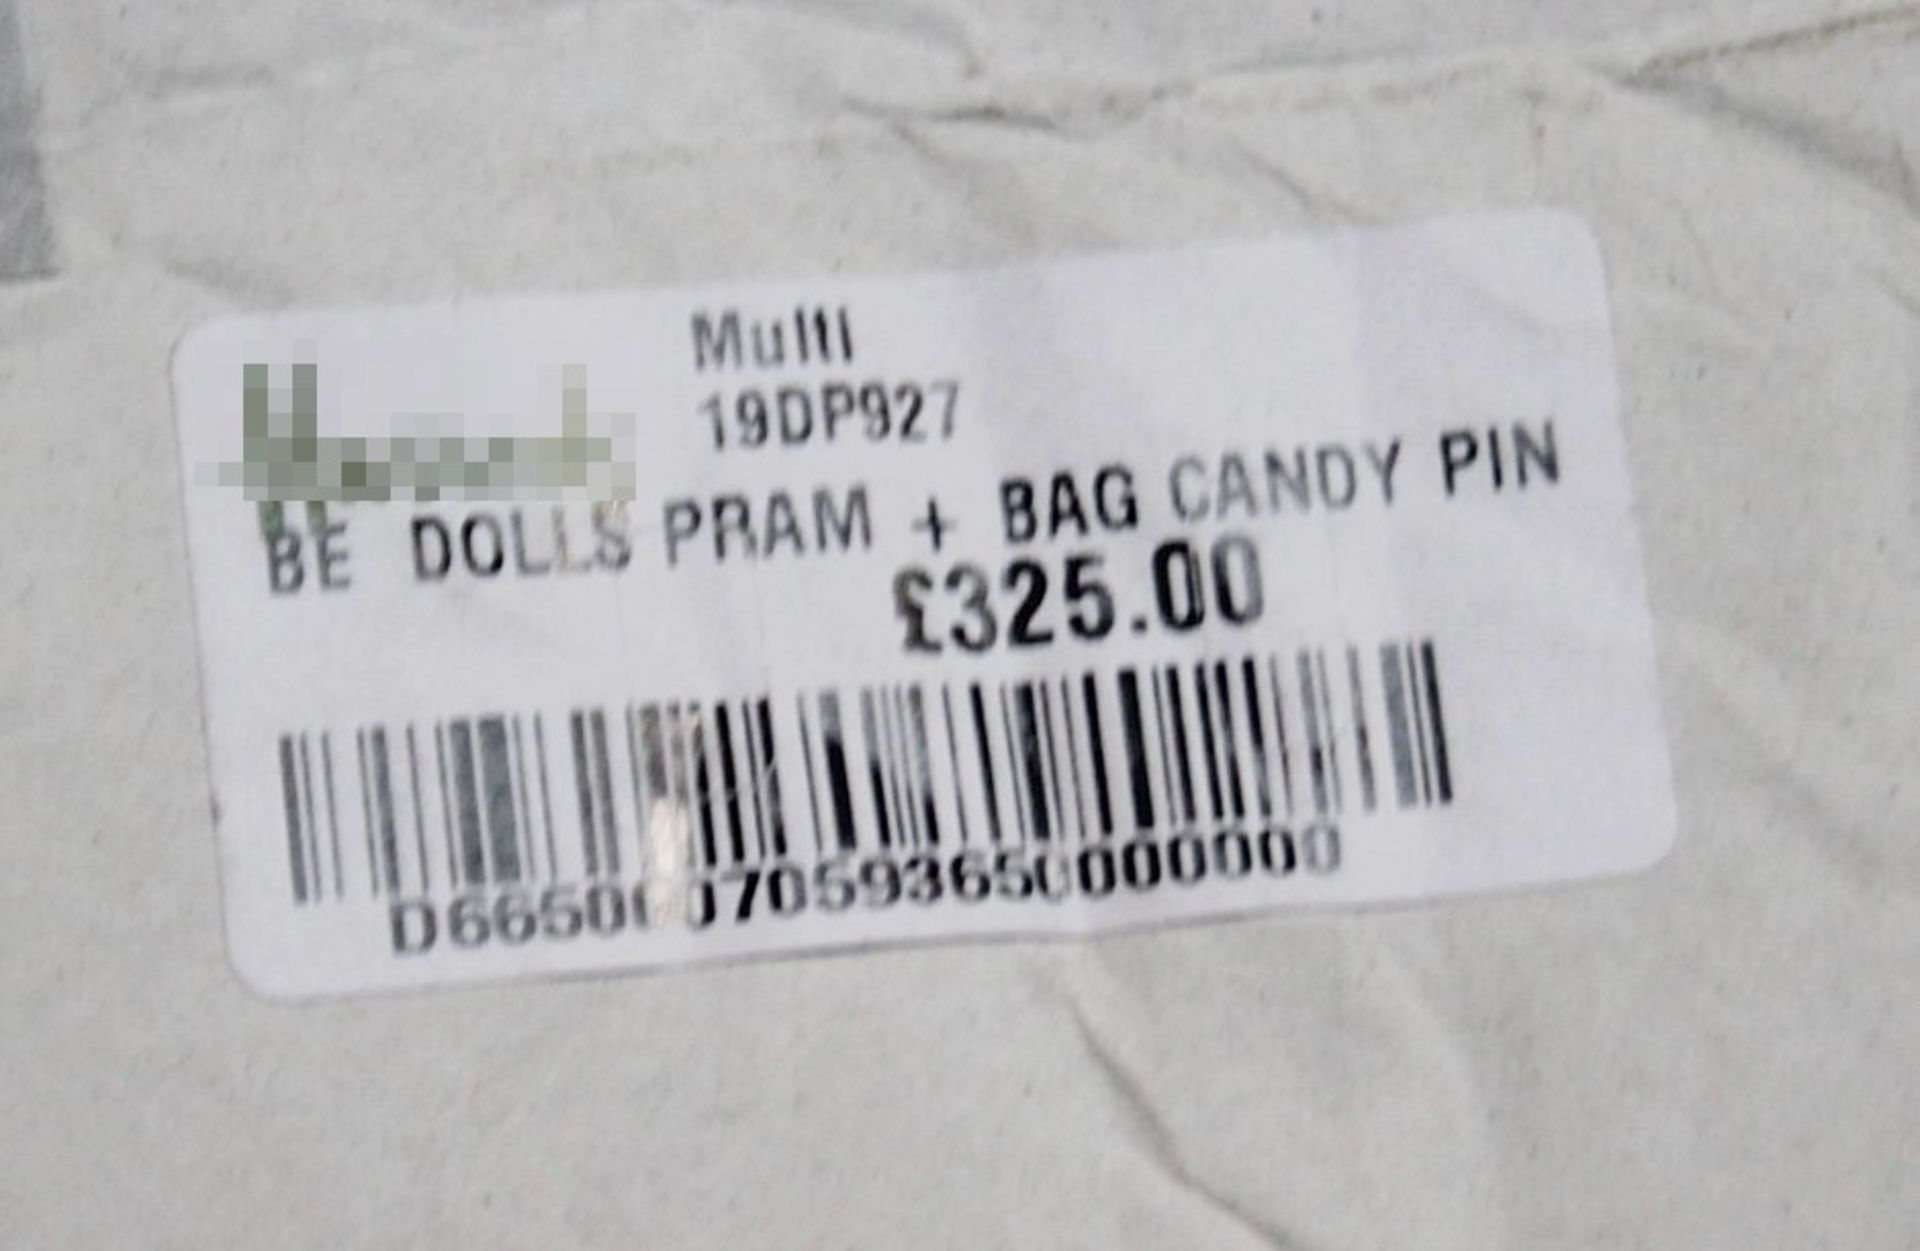 1 x BEBECAR 'Stylo' Premium Dolls Pram + Bag In Candy Pink - Original Price £325.00 - Image 12 of 13